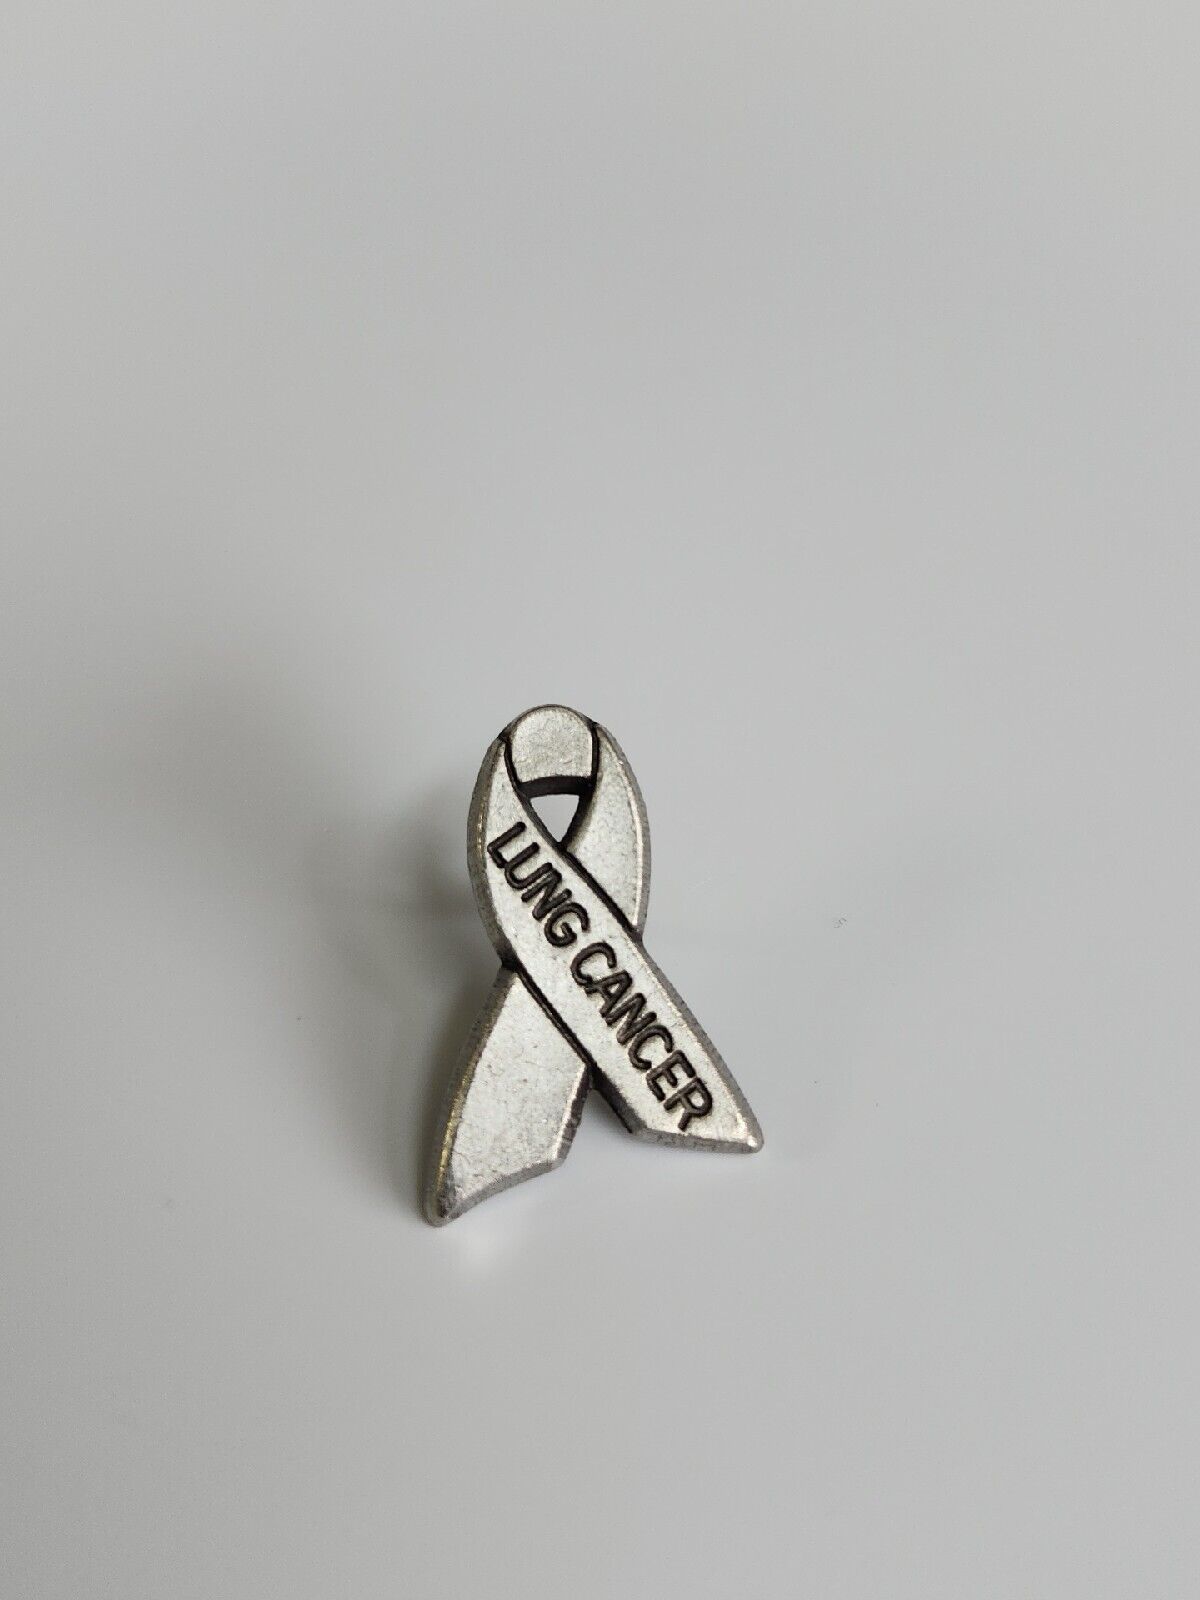 Lung Cancer Awareness Ribbon Lapel Pin Silver Color Metal